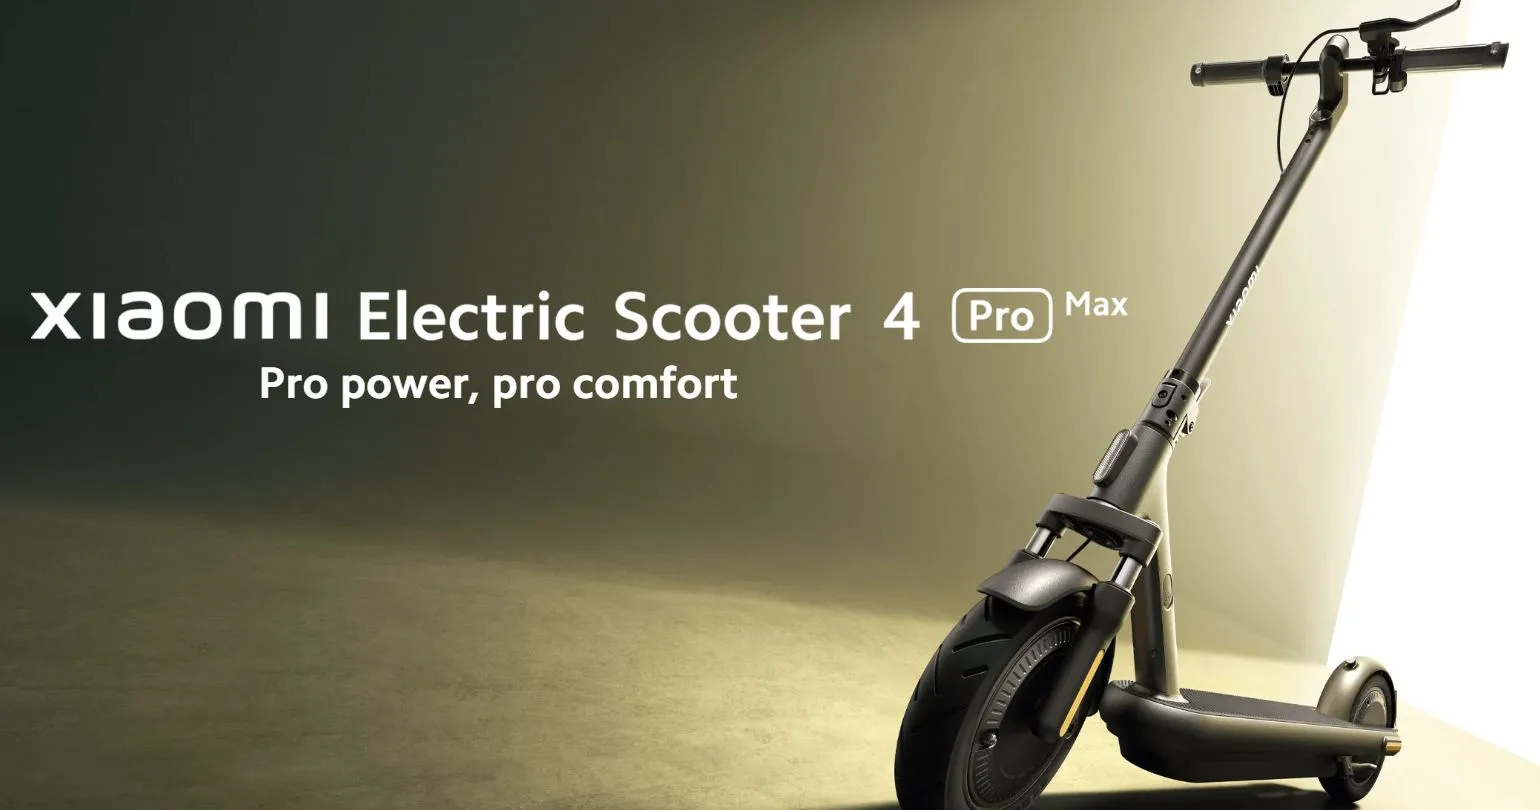 Xiaomi Electric Scooter 4 Pro Max plakatas